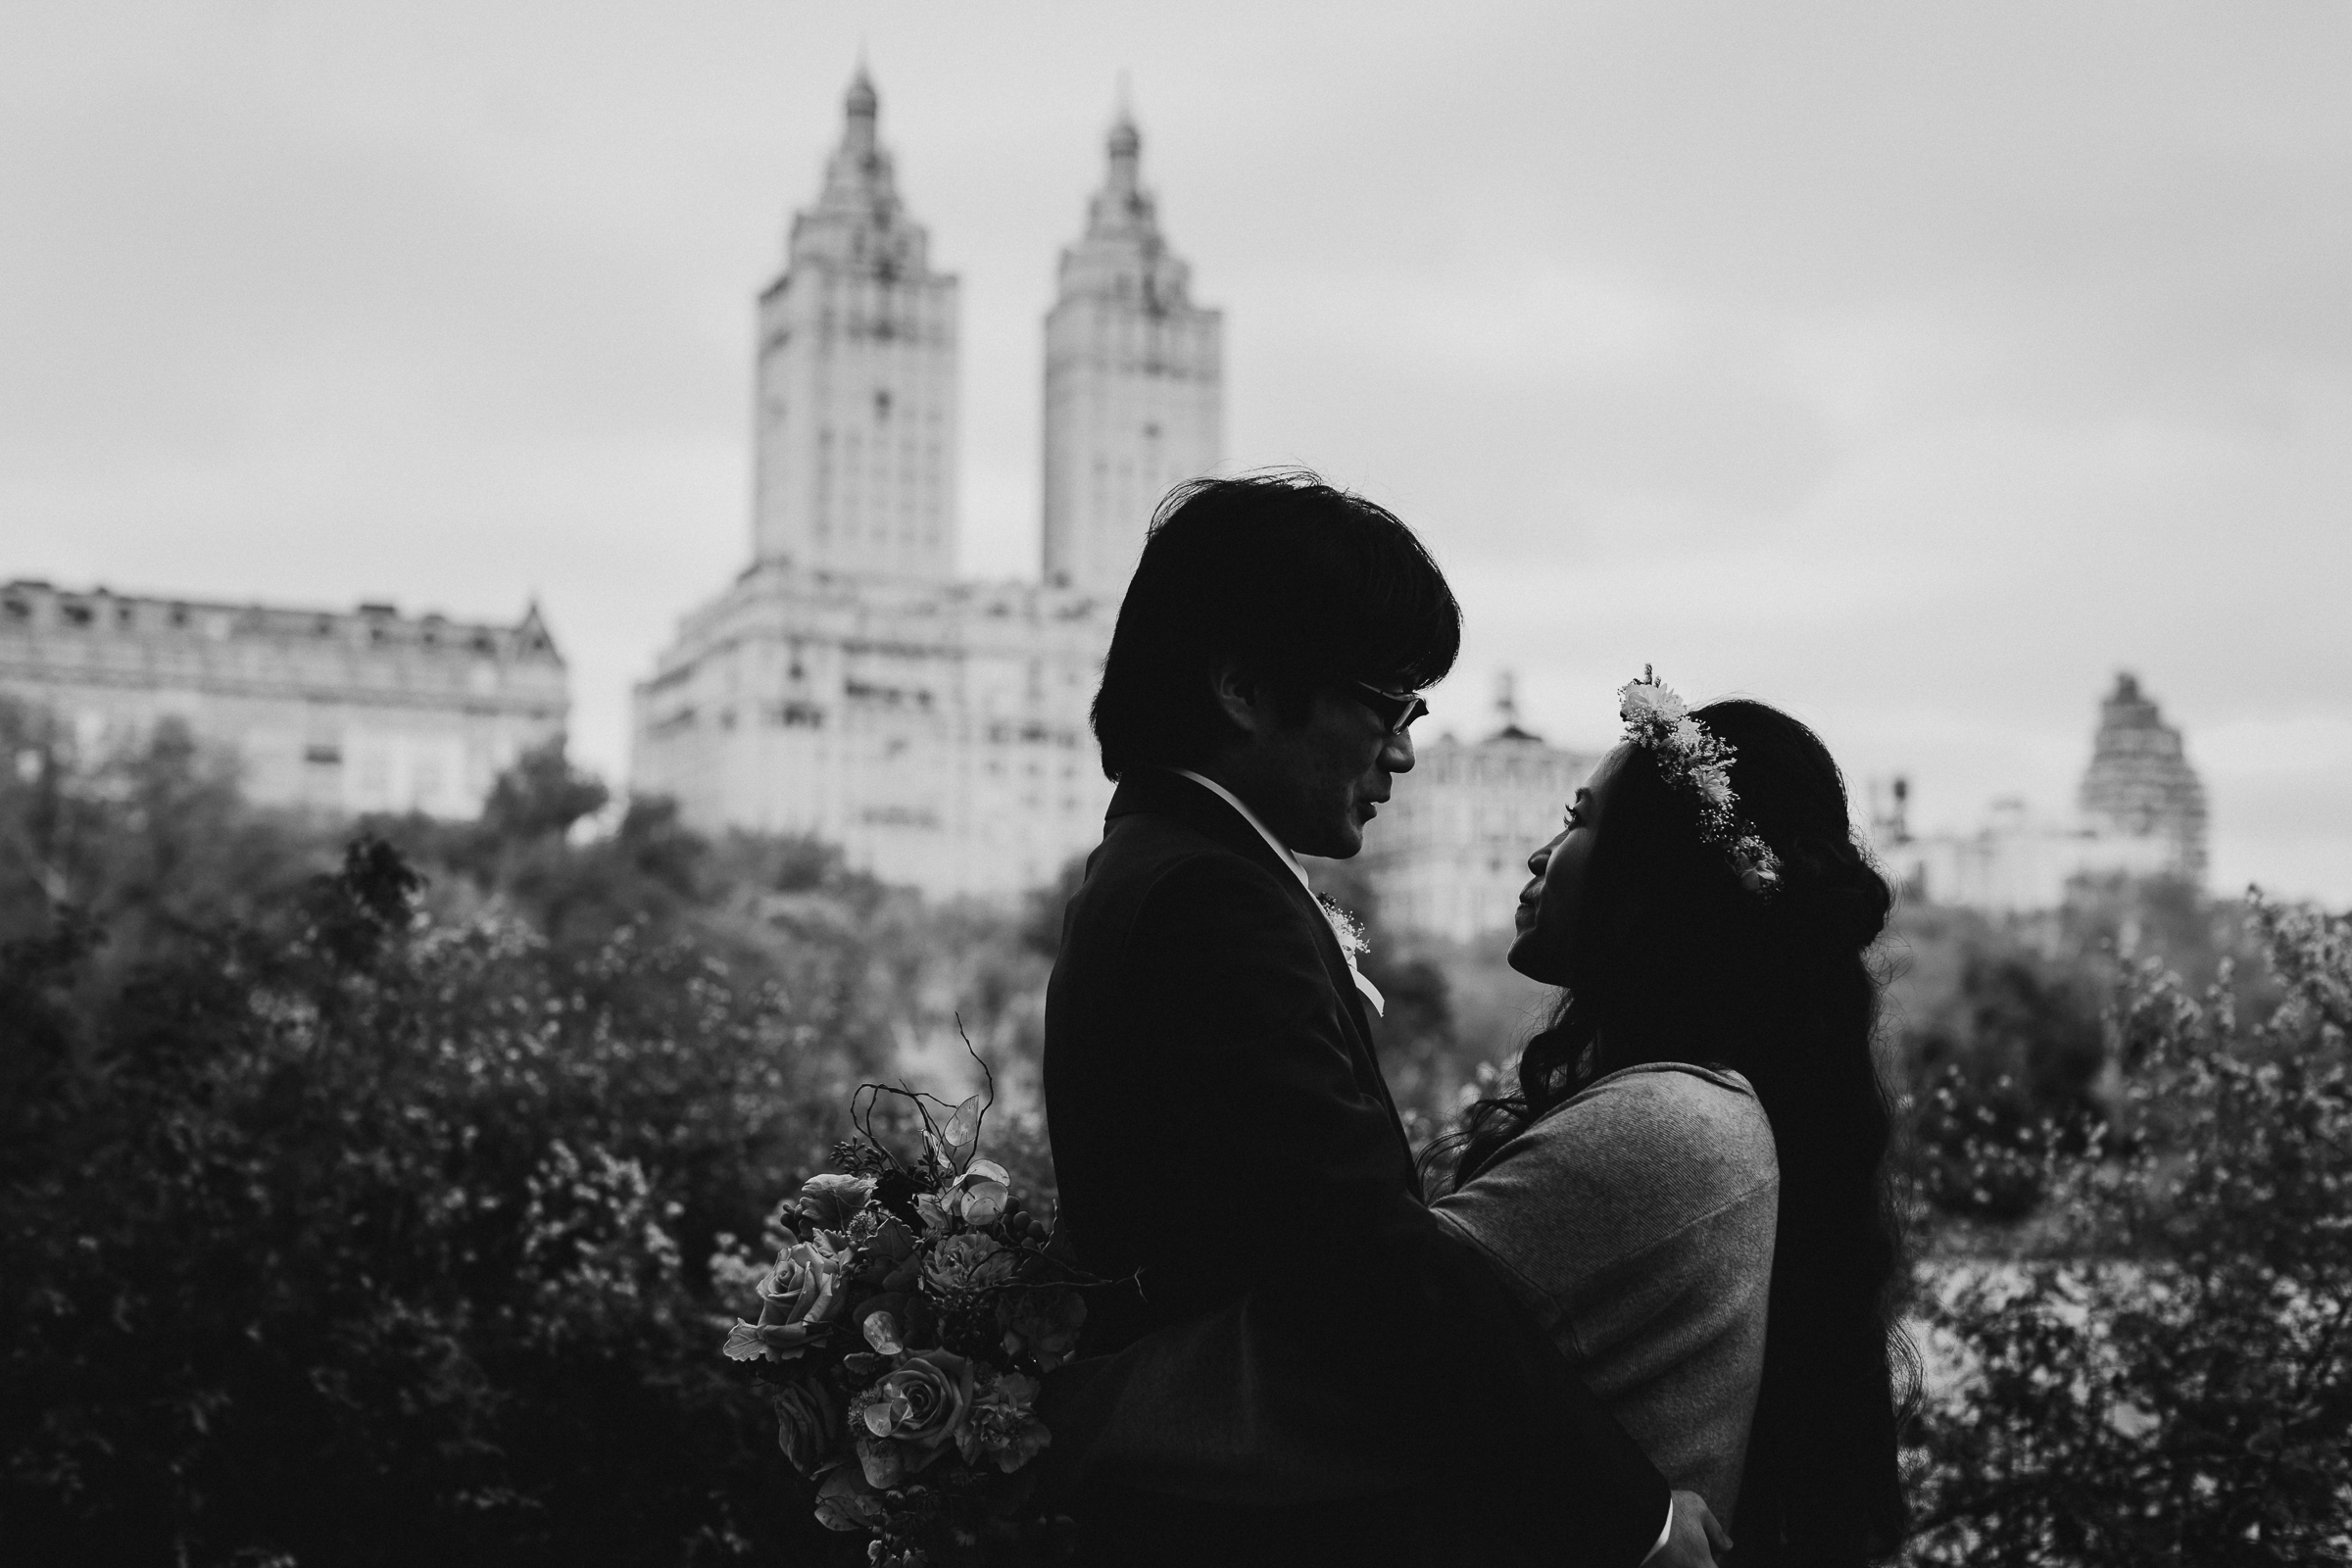 Central-Park-Brooklyn-Bridge-Dumbo-NYC-Documentary-Wedding-Photographer-36.jpg